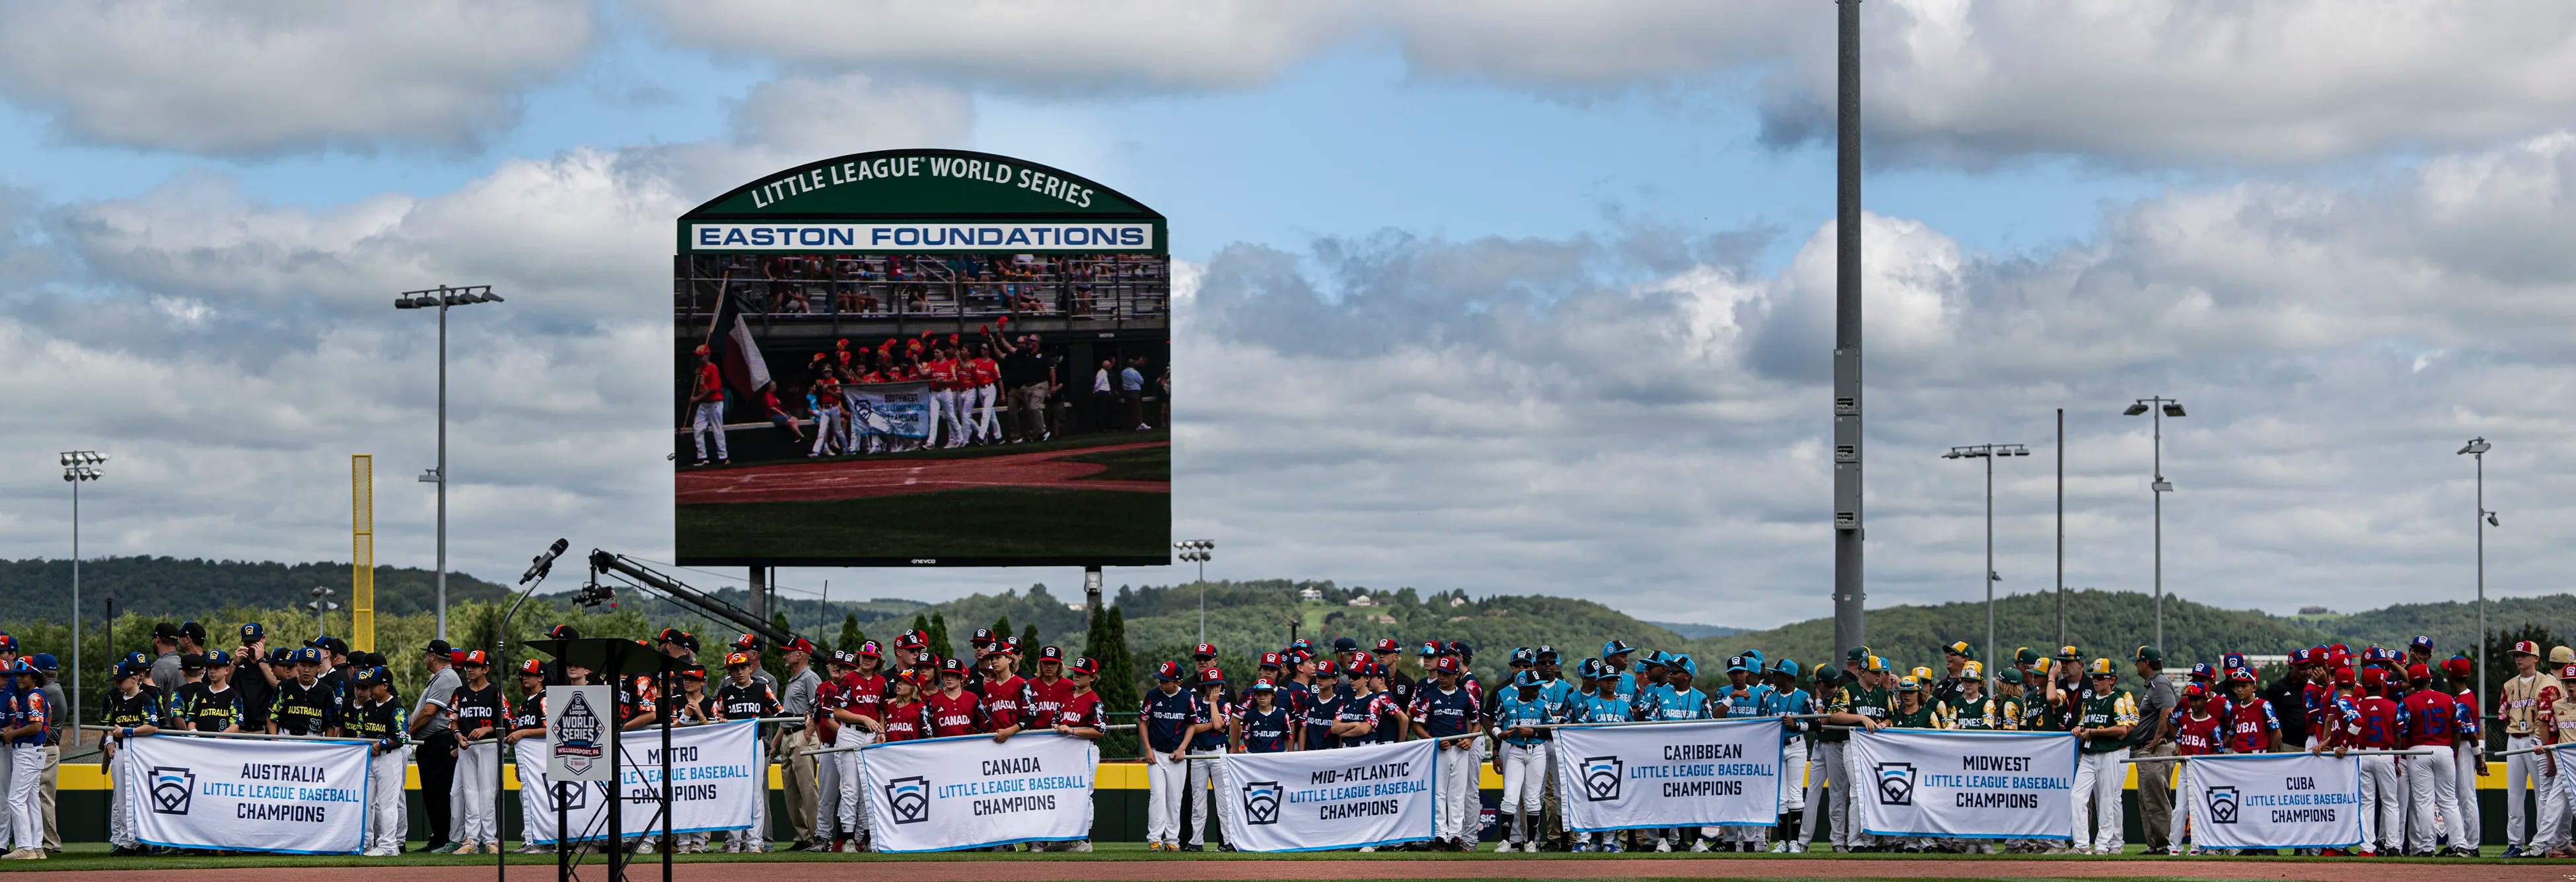 Photos of the 2023 Little League Baseball World Series Opening